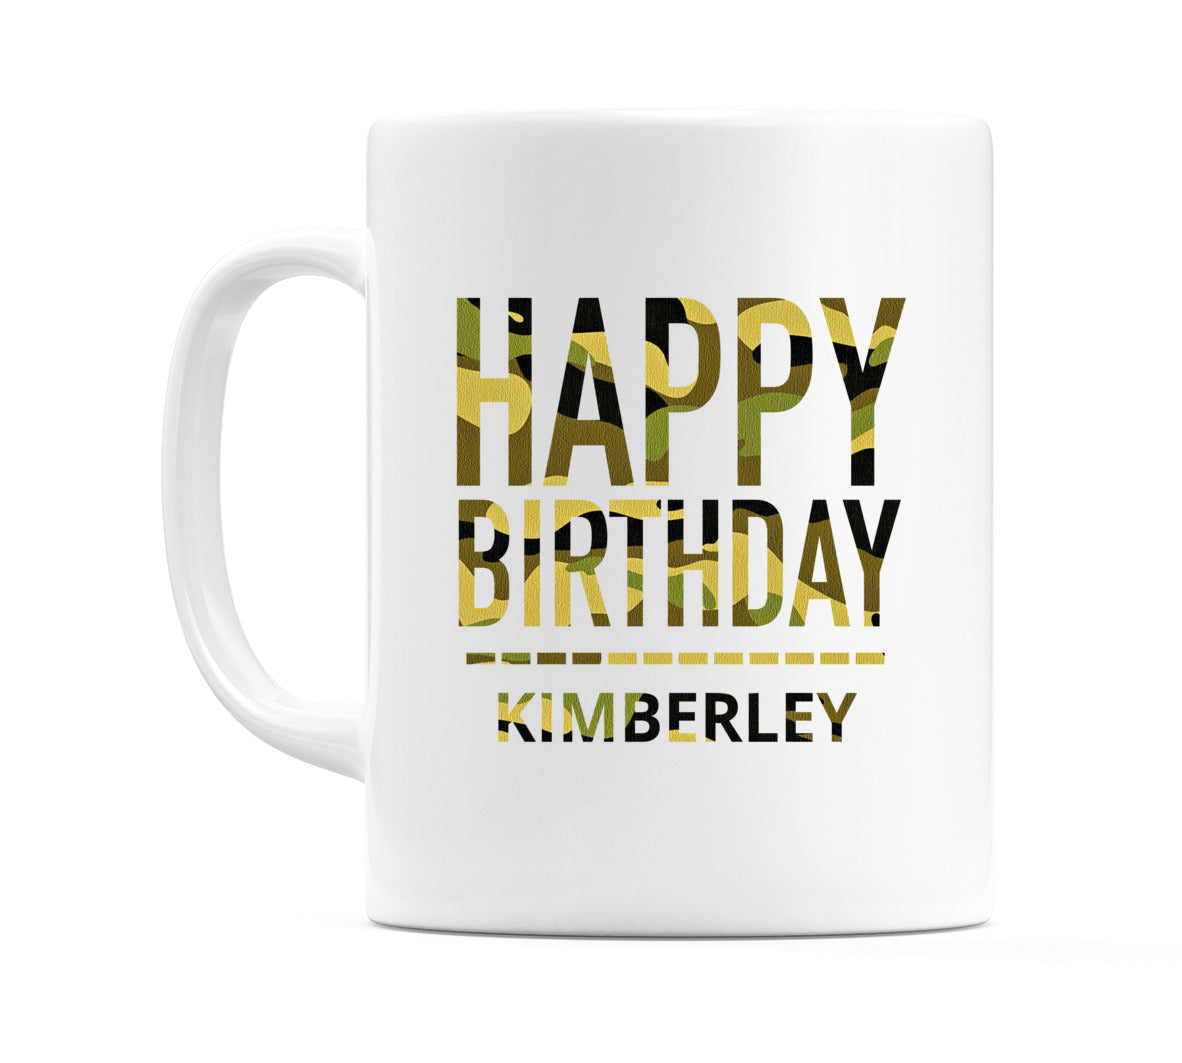 Happy Birthday Kimberley (Camo) Mug Cup by WeDoMugs